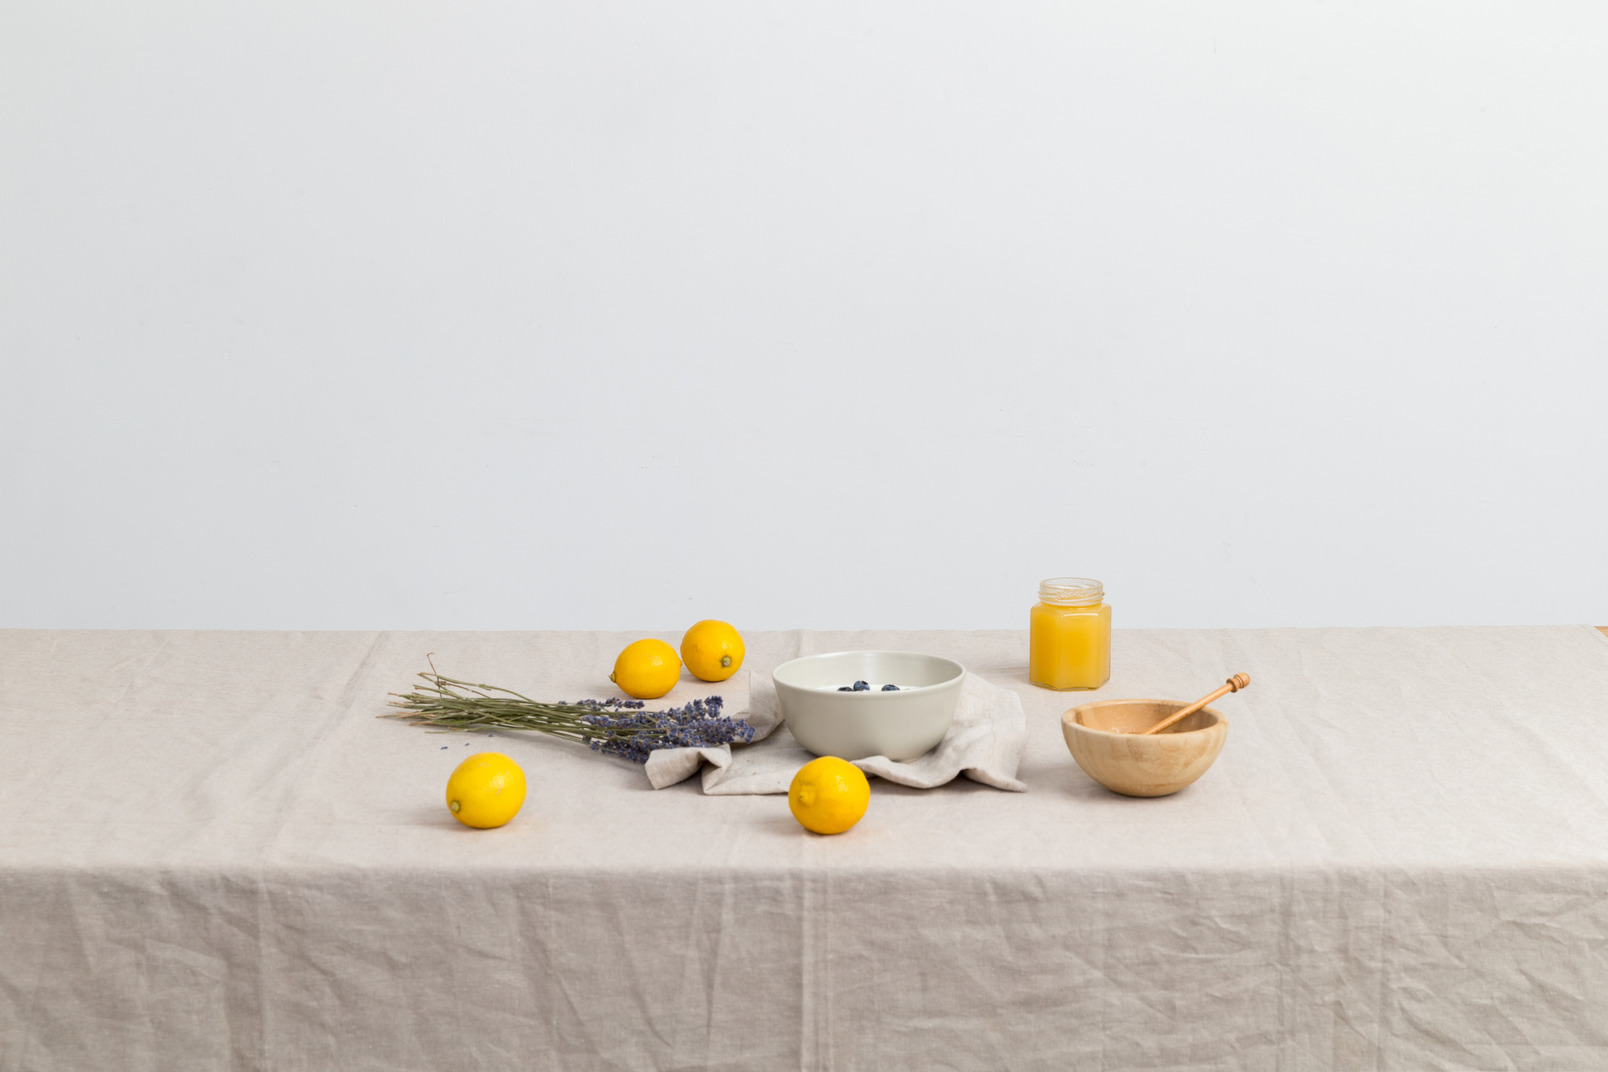 Lemons, jar of honey and dried flowers